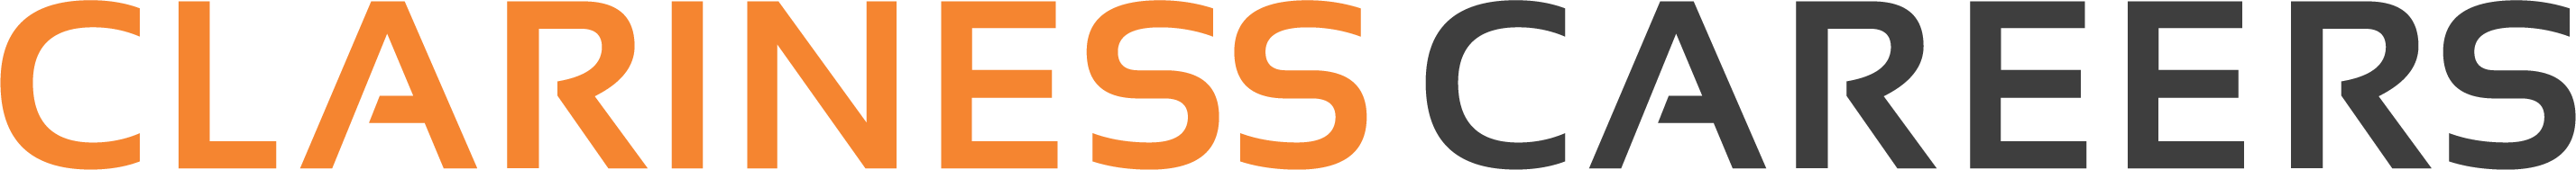 Clariness Careers Logo